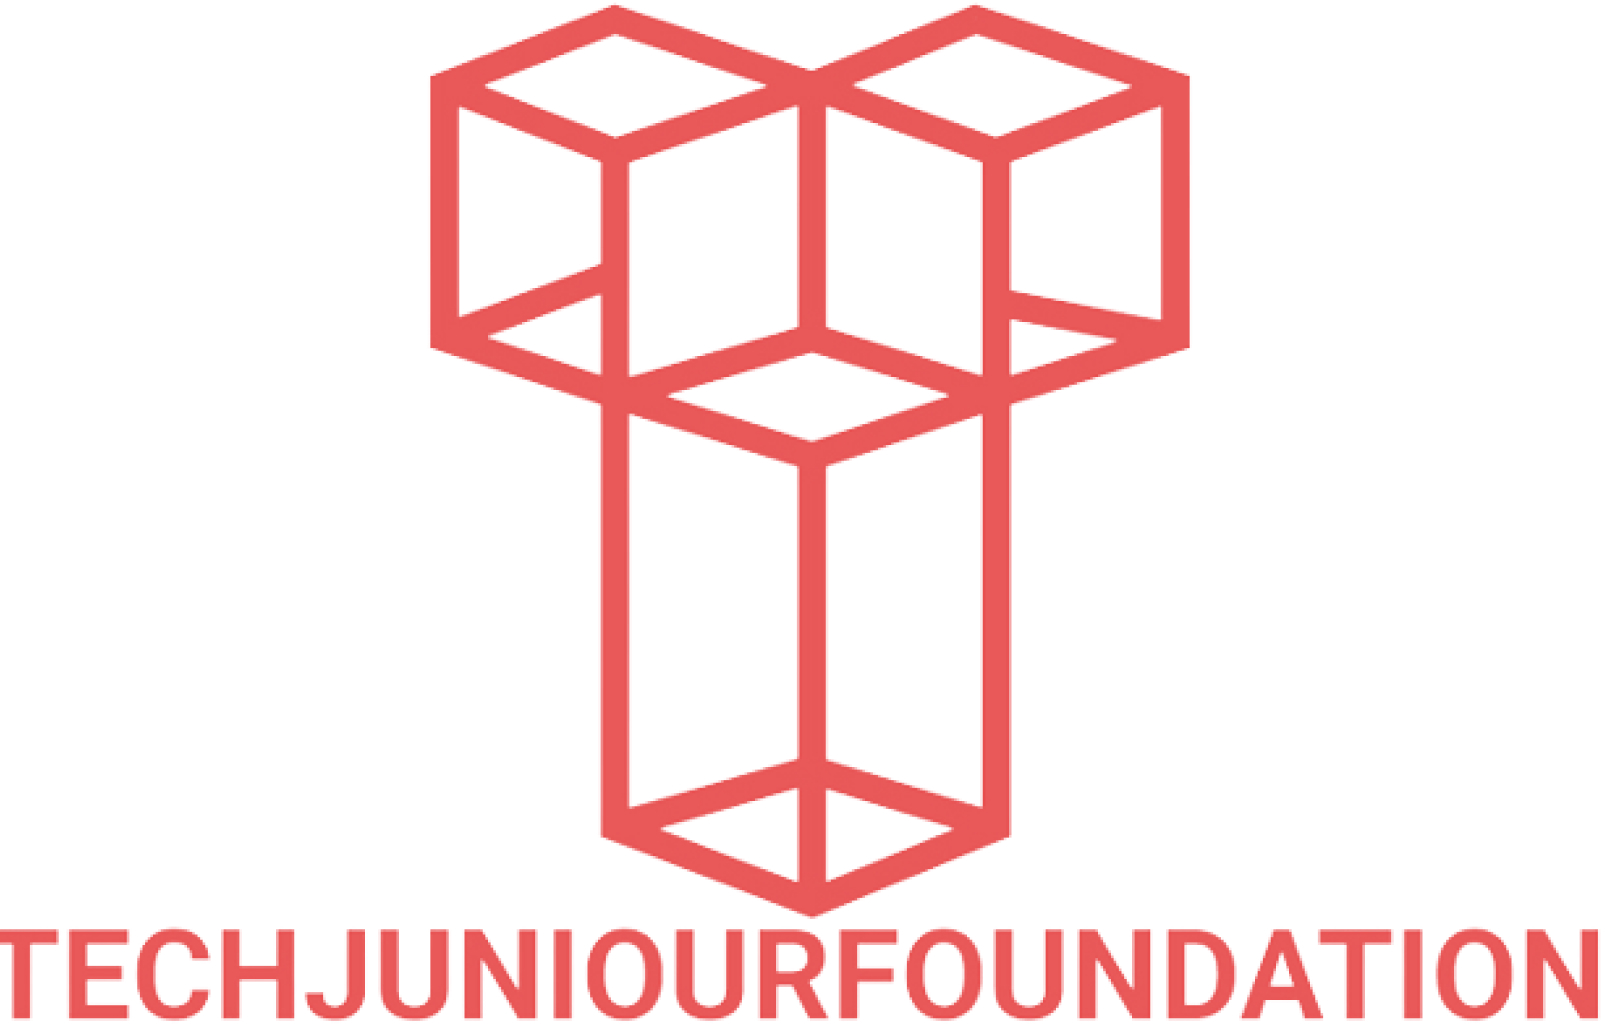 Great minds in tech (Tech junior foundation) Logo